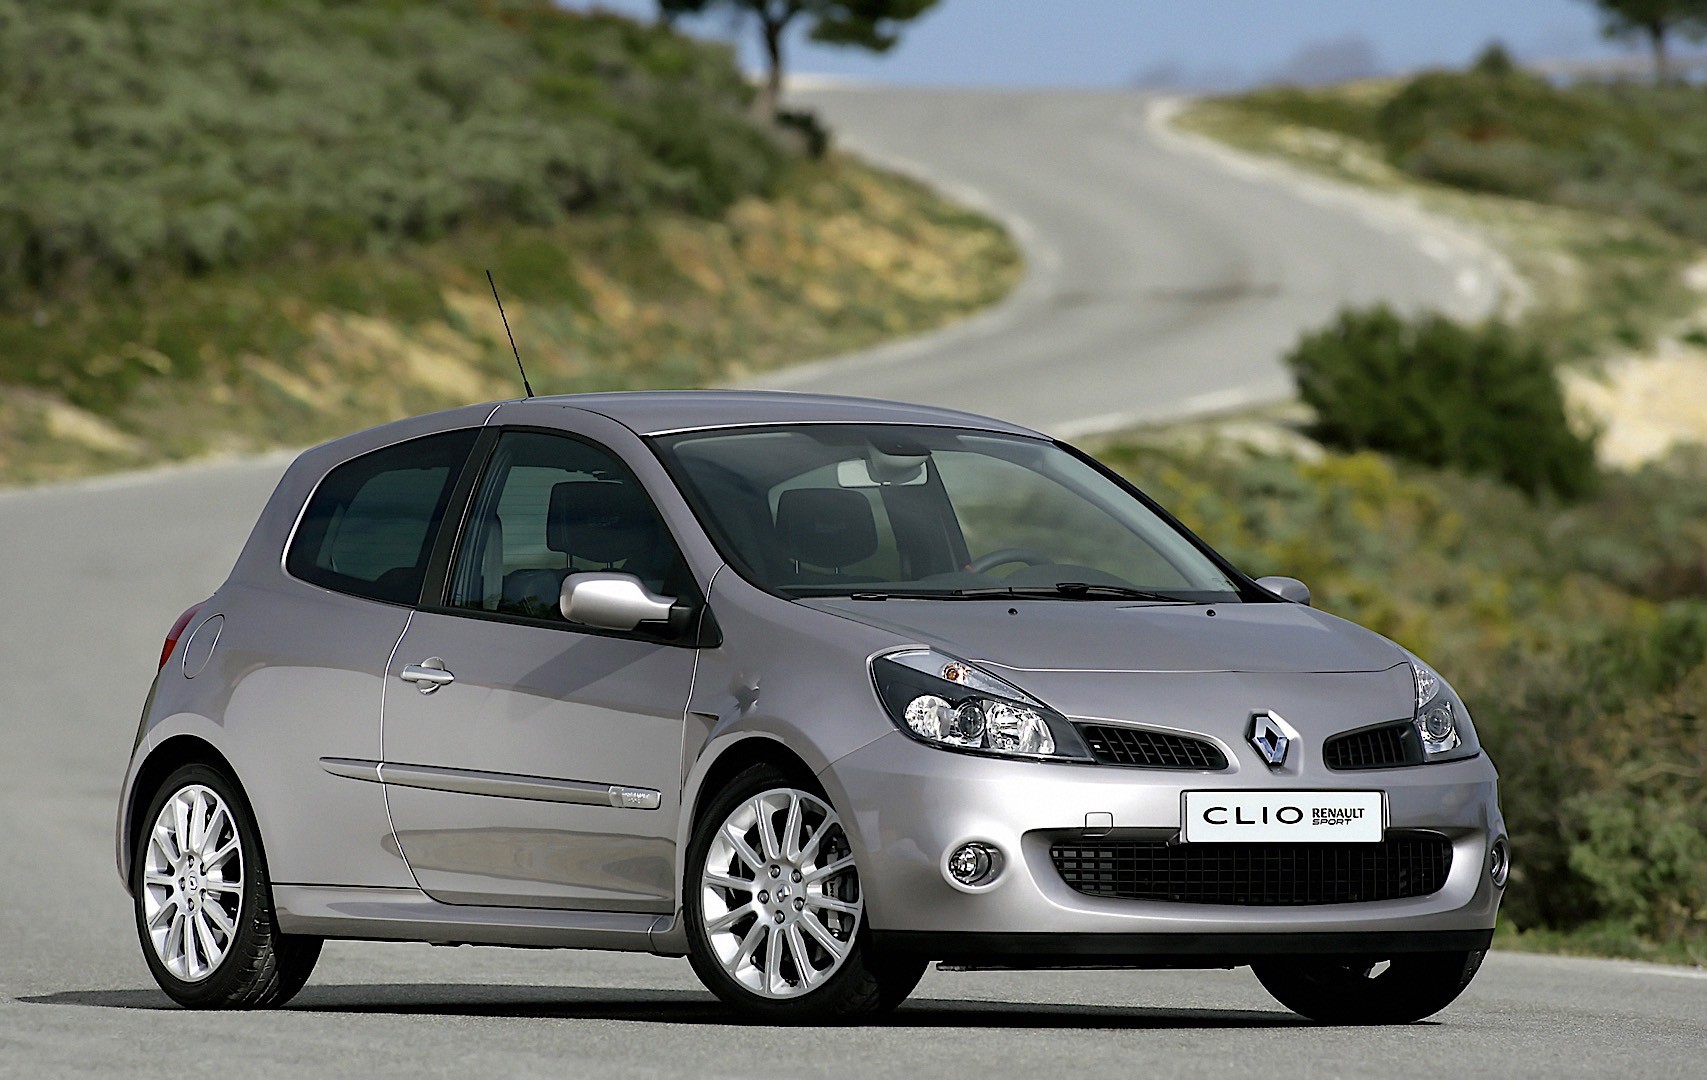 2024 Renault Clio Specs & Photos - autoevolution